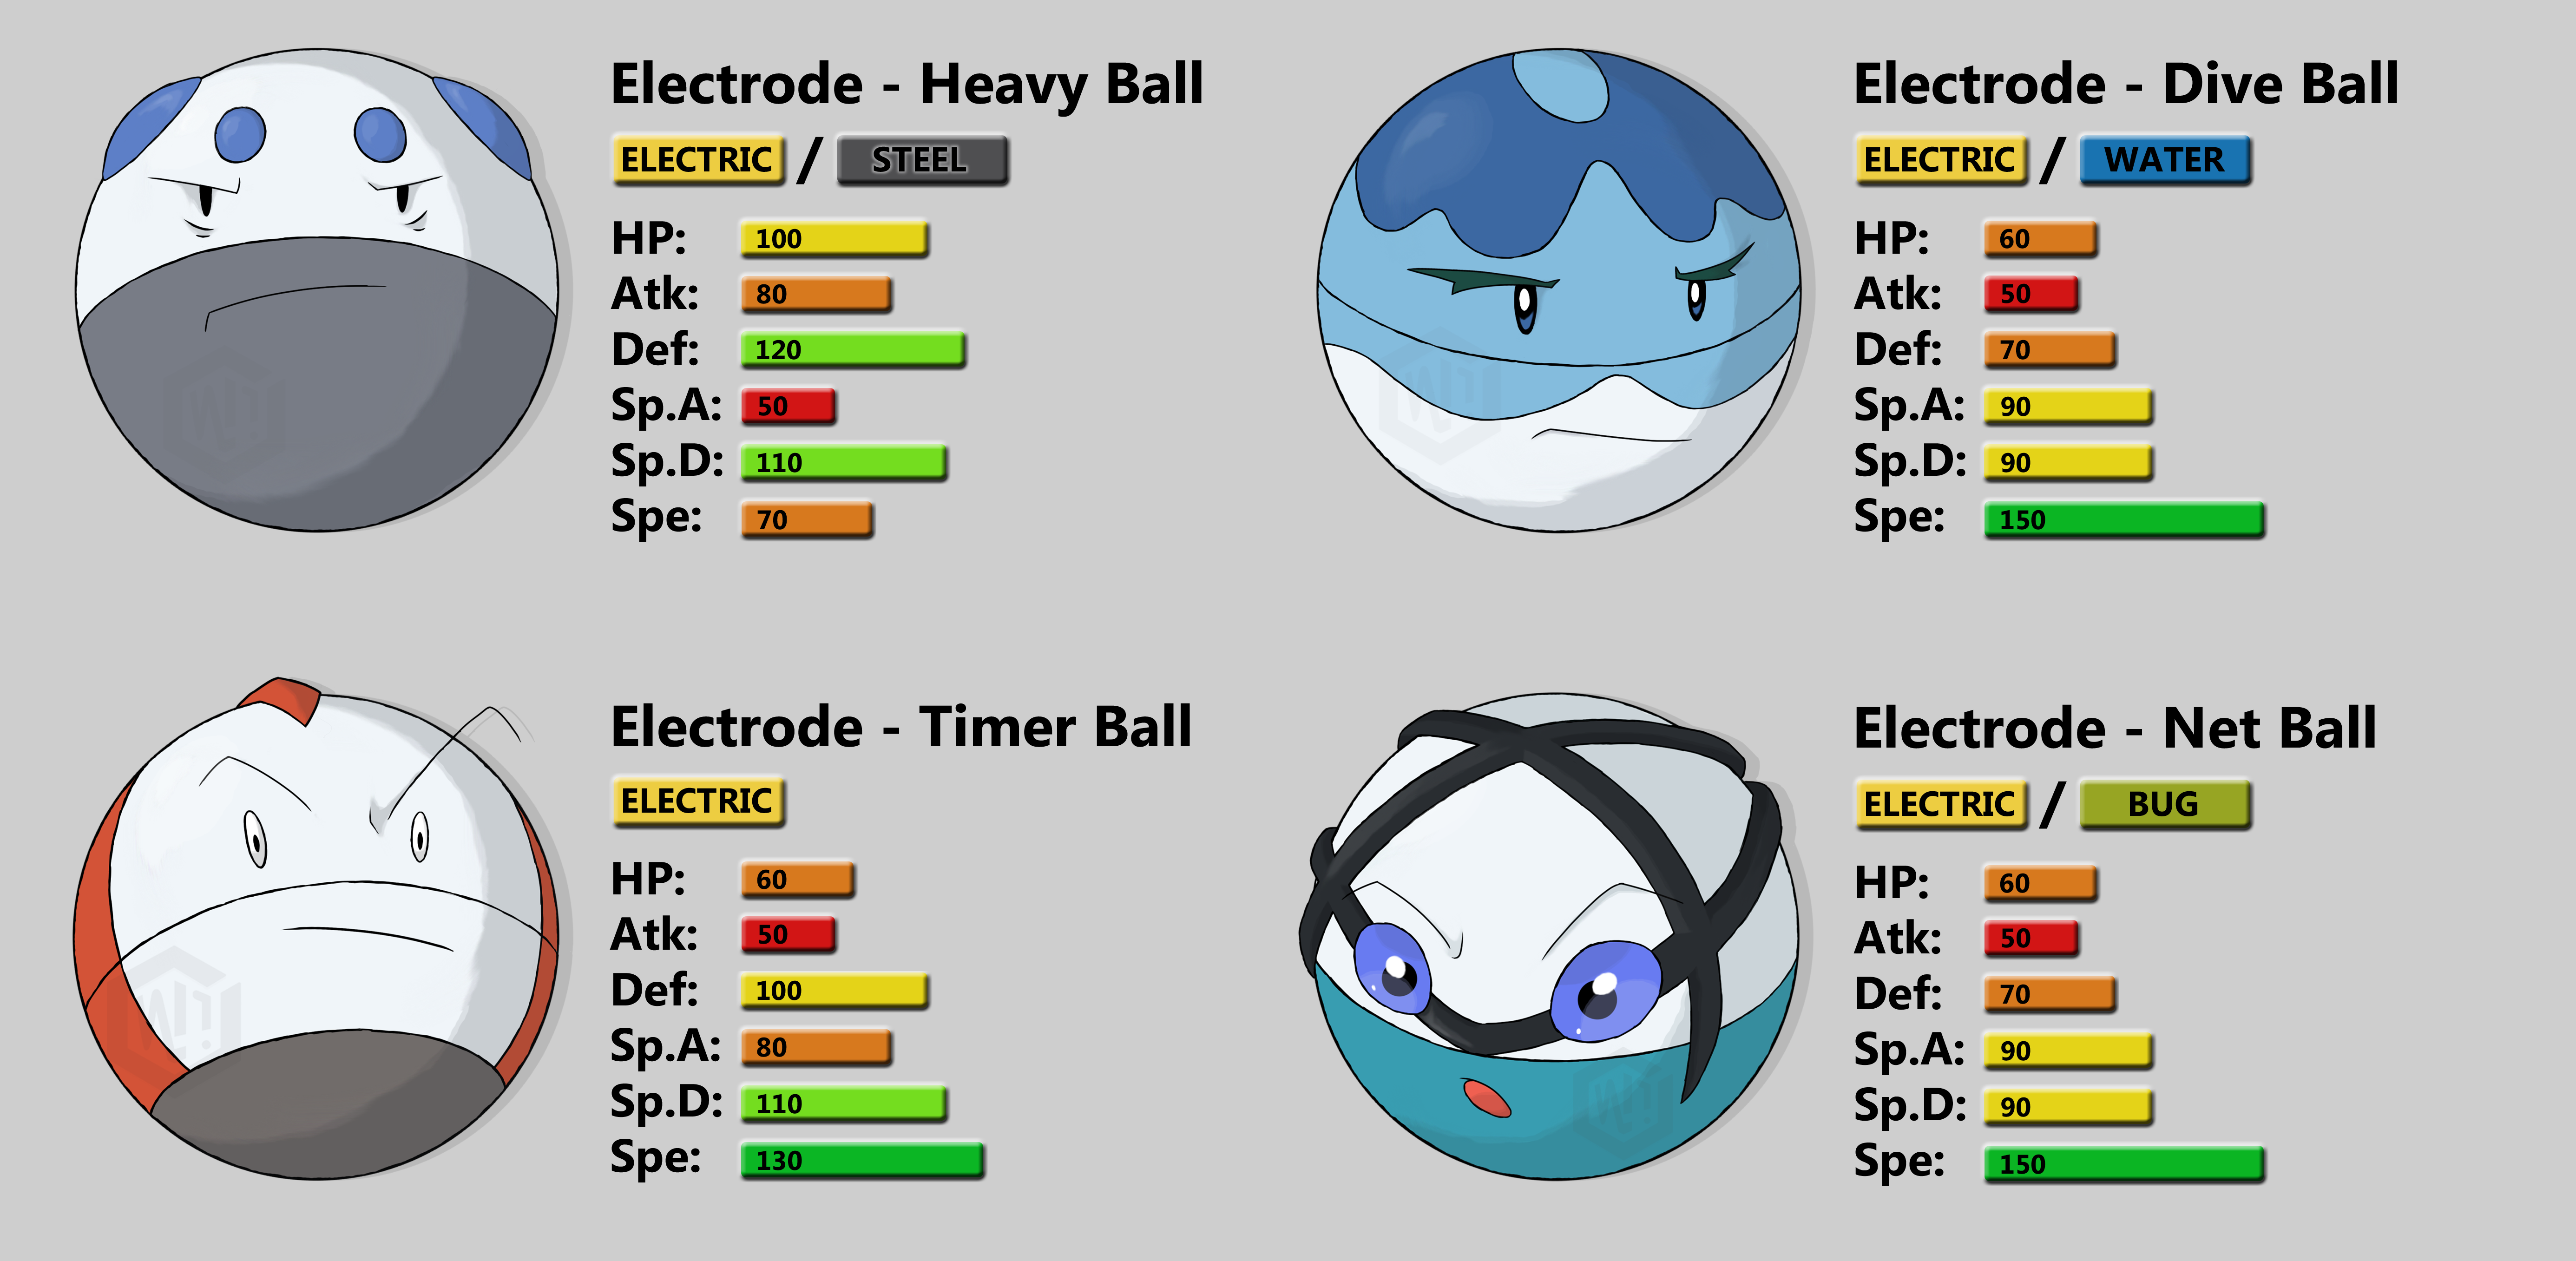 Pokemon Go Voltorb(467) Evolution to Electrode 